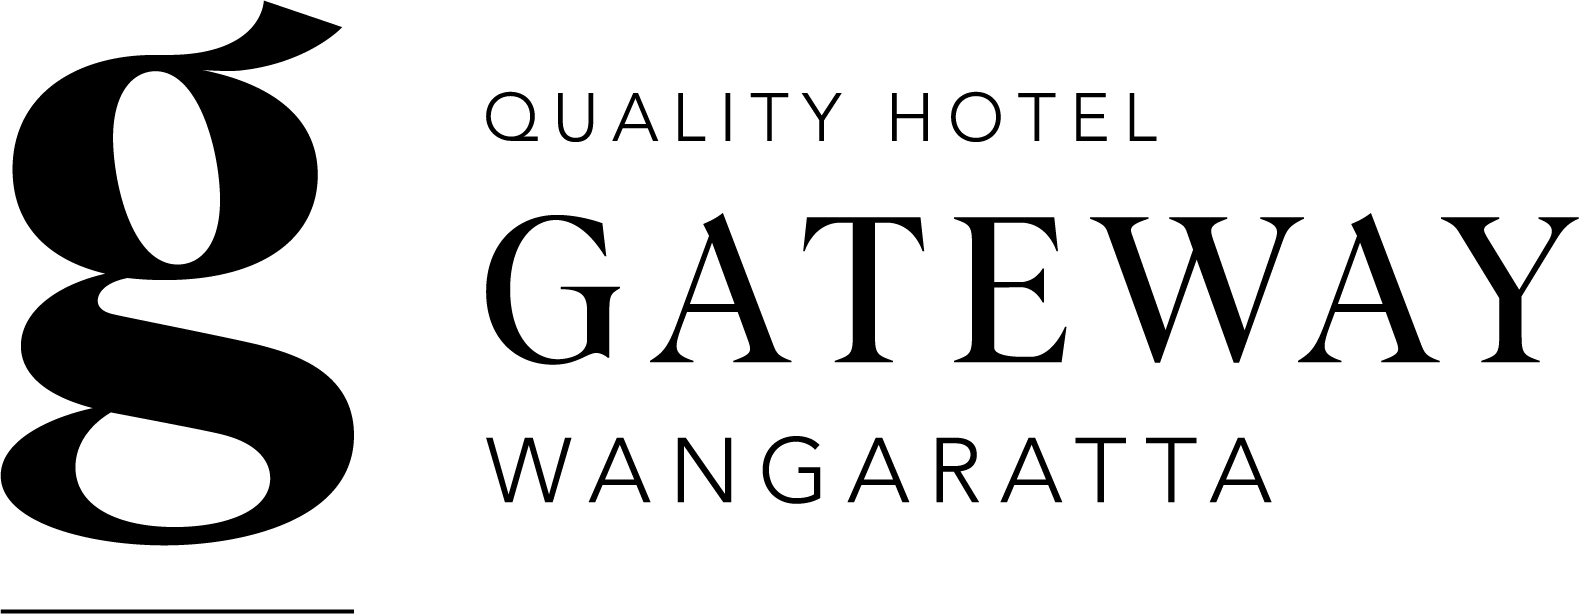 Jones Hotel Group - Quality Wangaratta Gateway